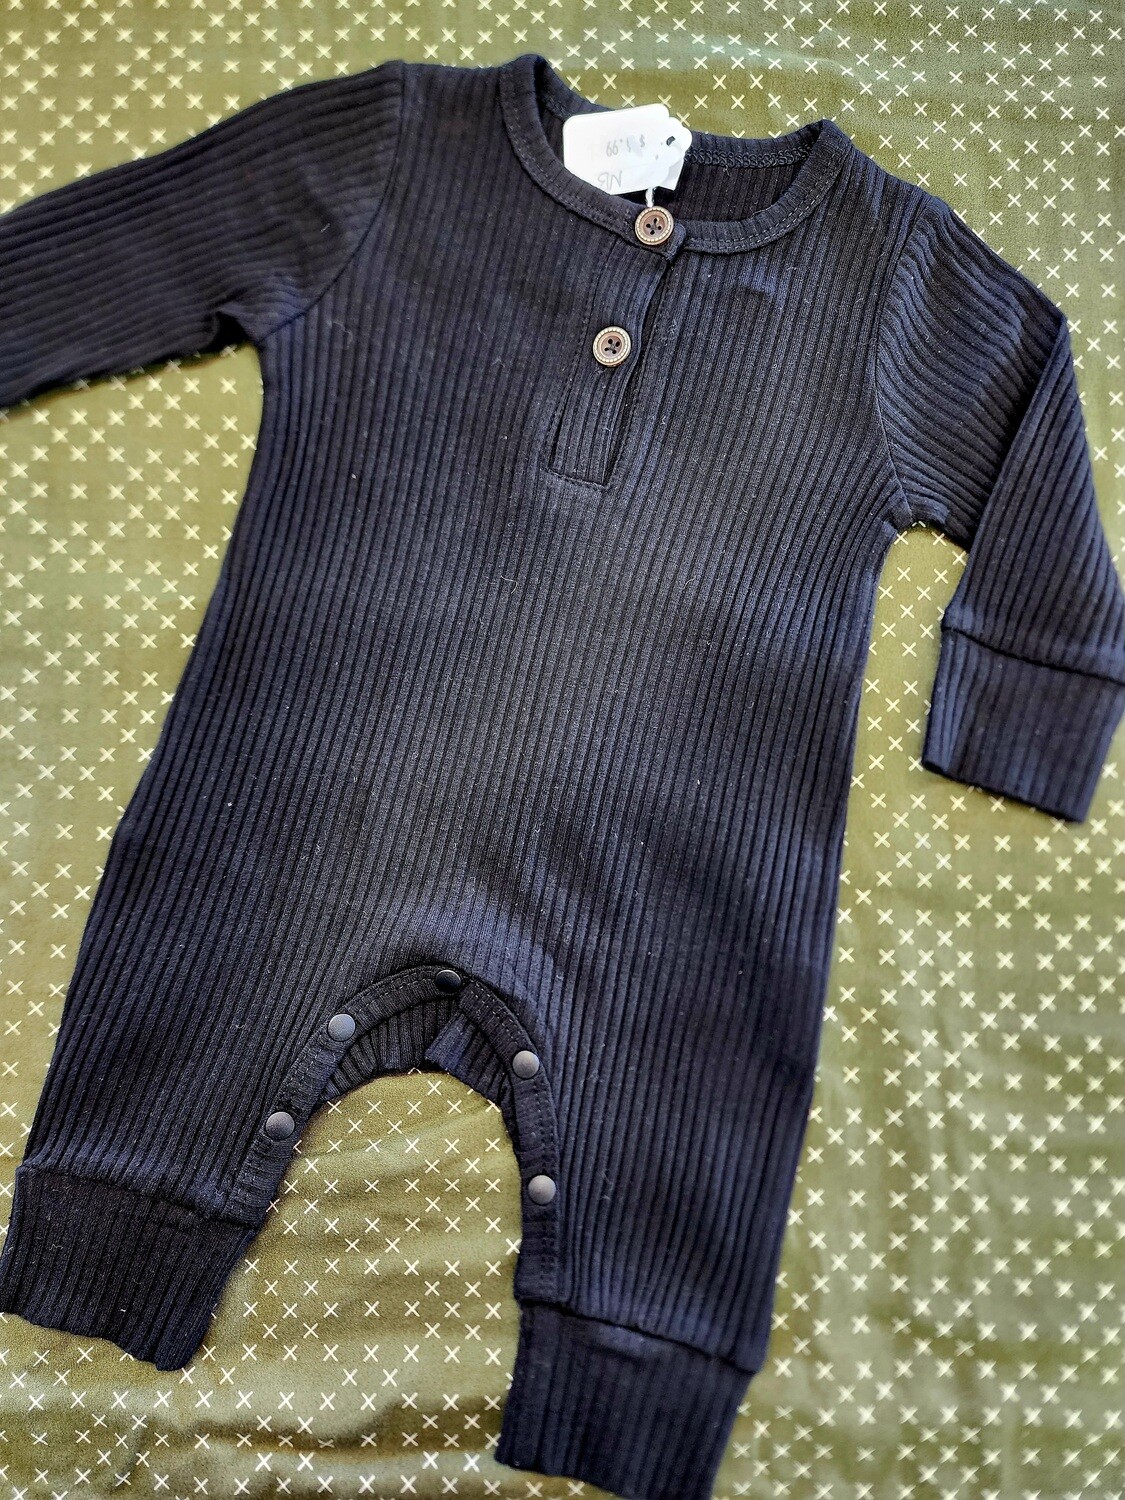 Black Baby Jumpsuit Newborn